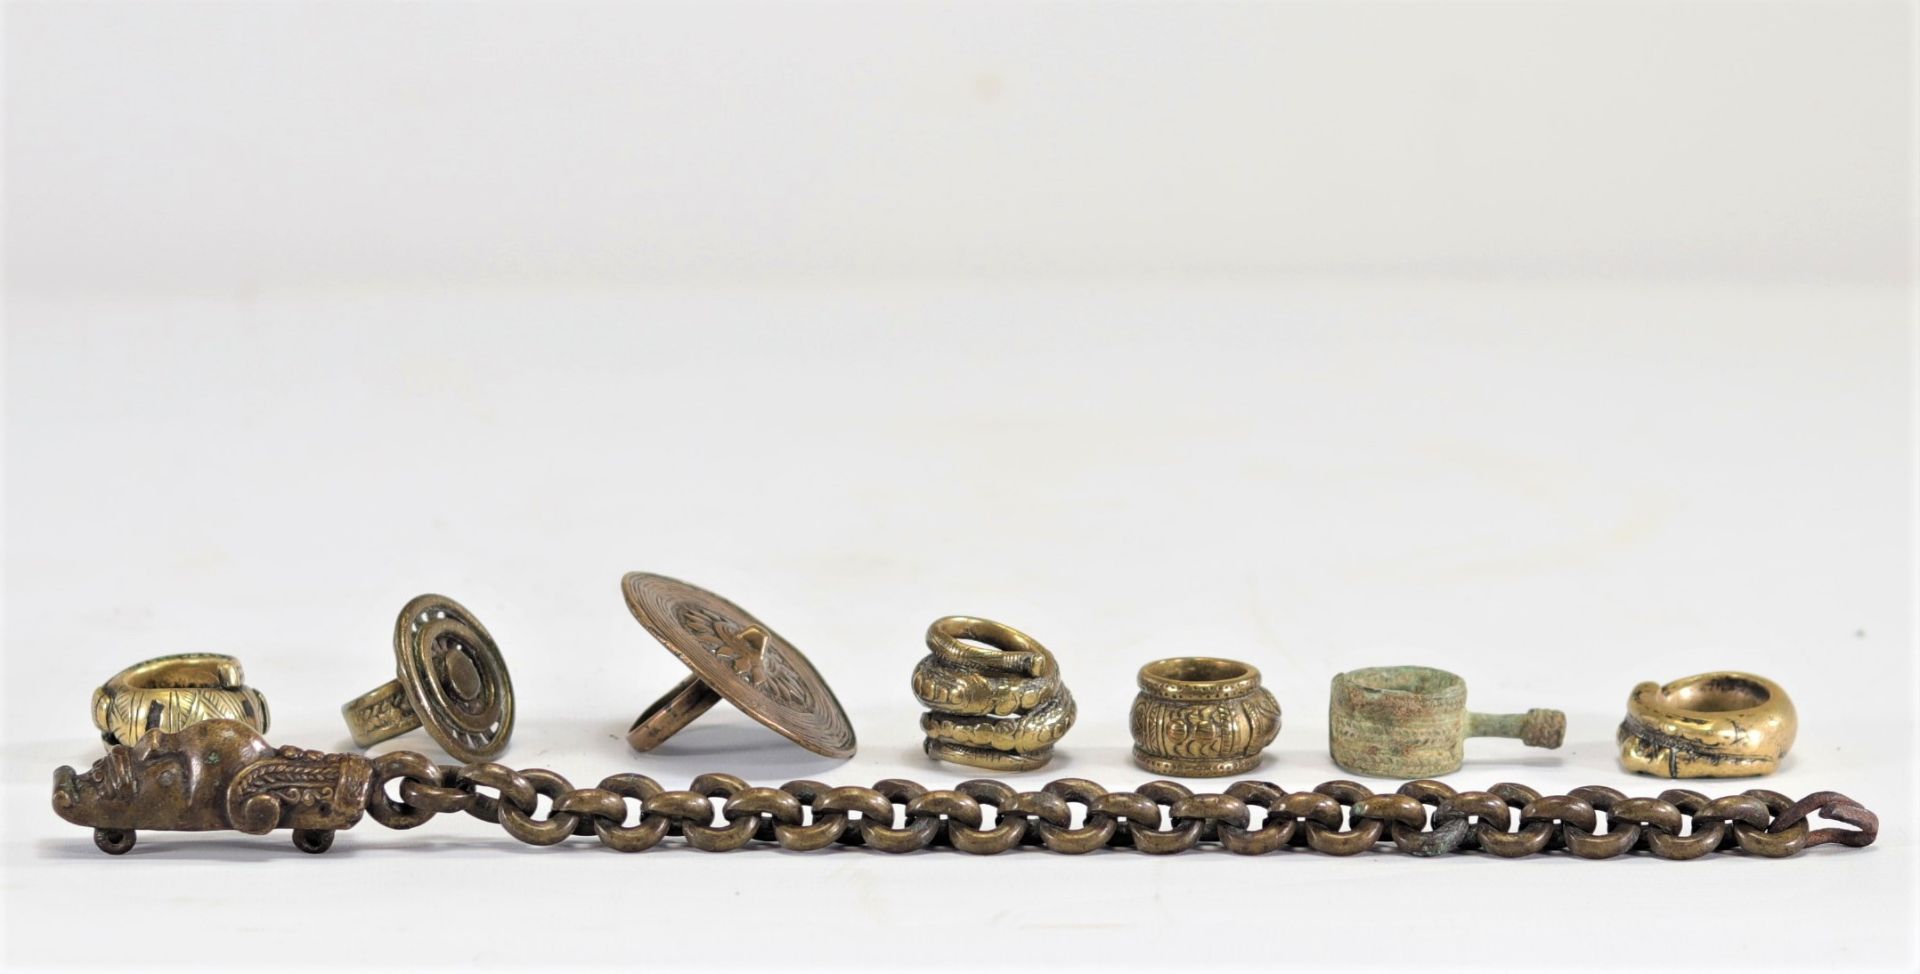 Lot (7) of Batak Sumatra bronze rings and a jewel